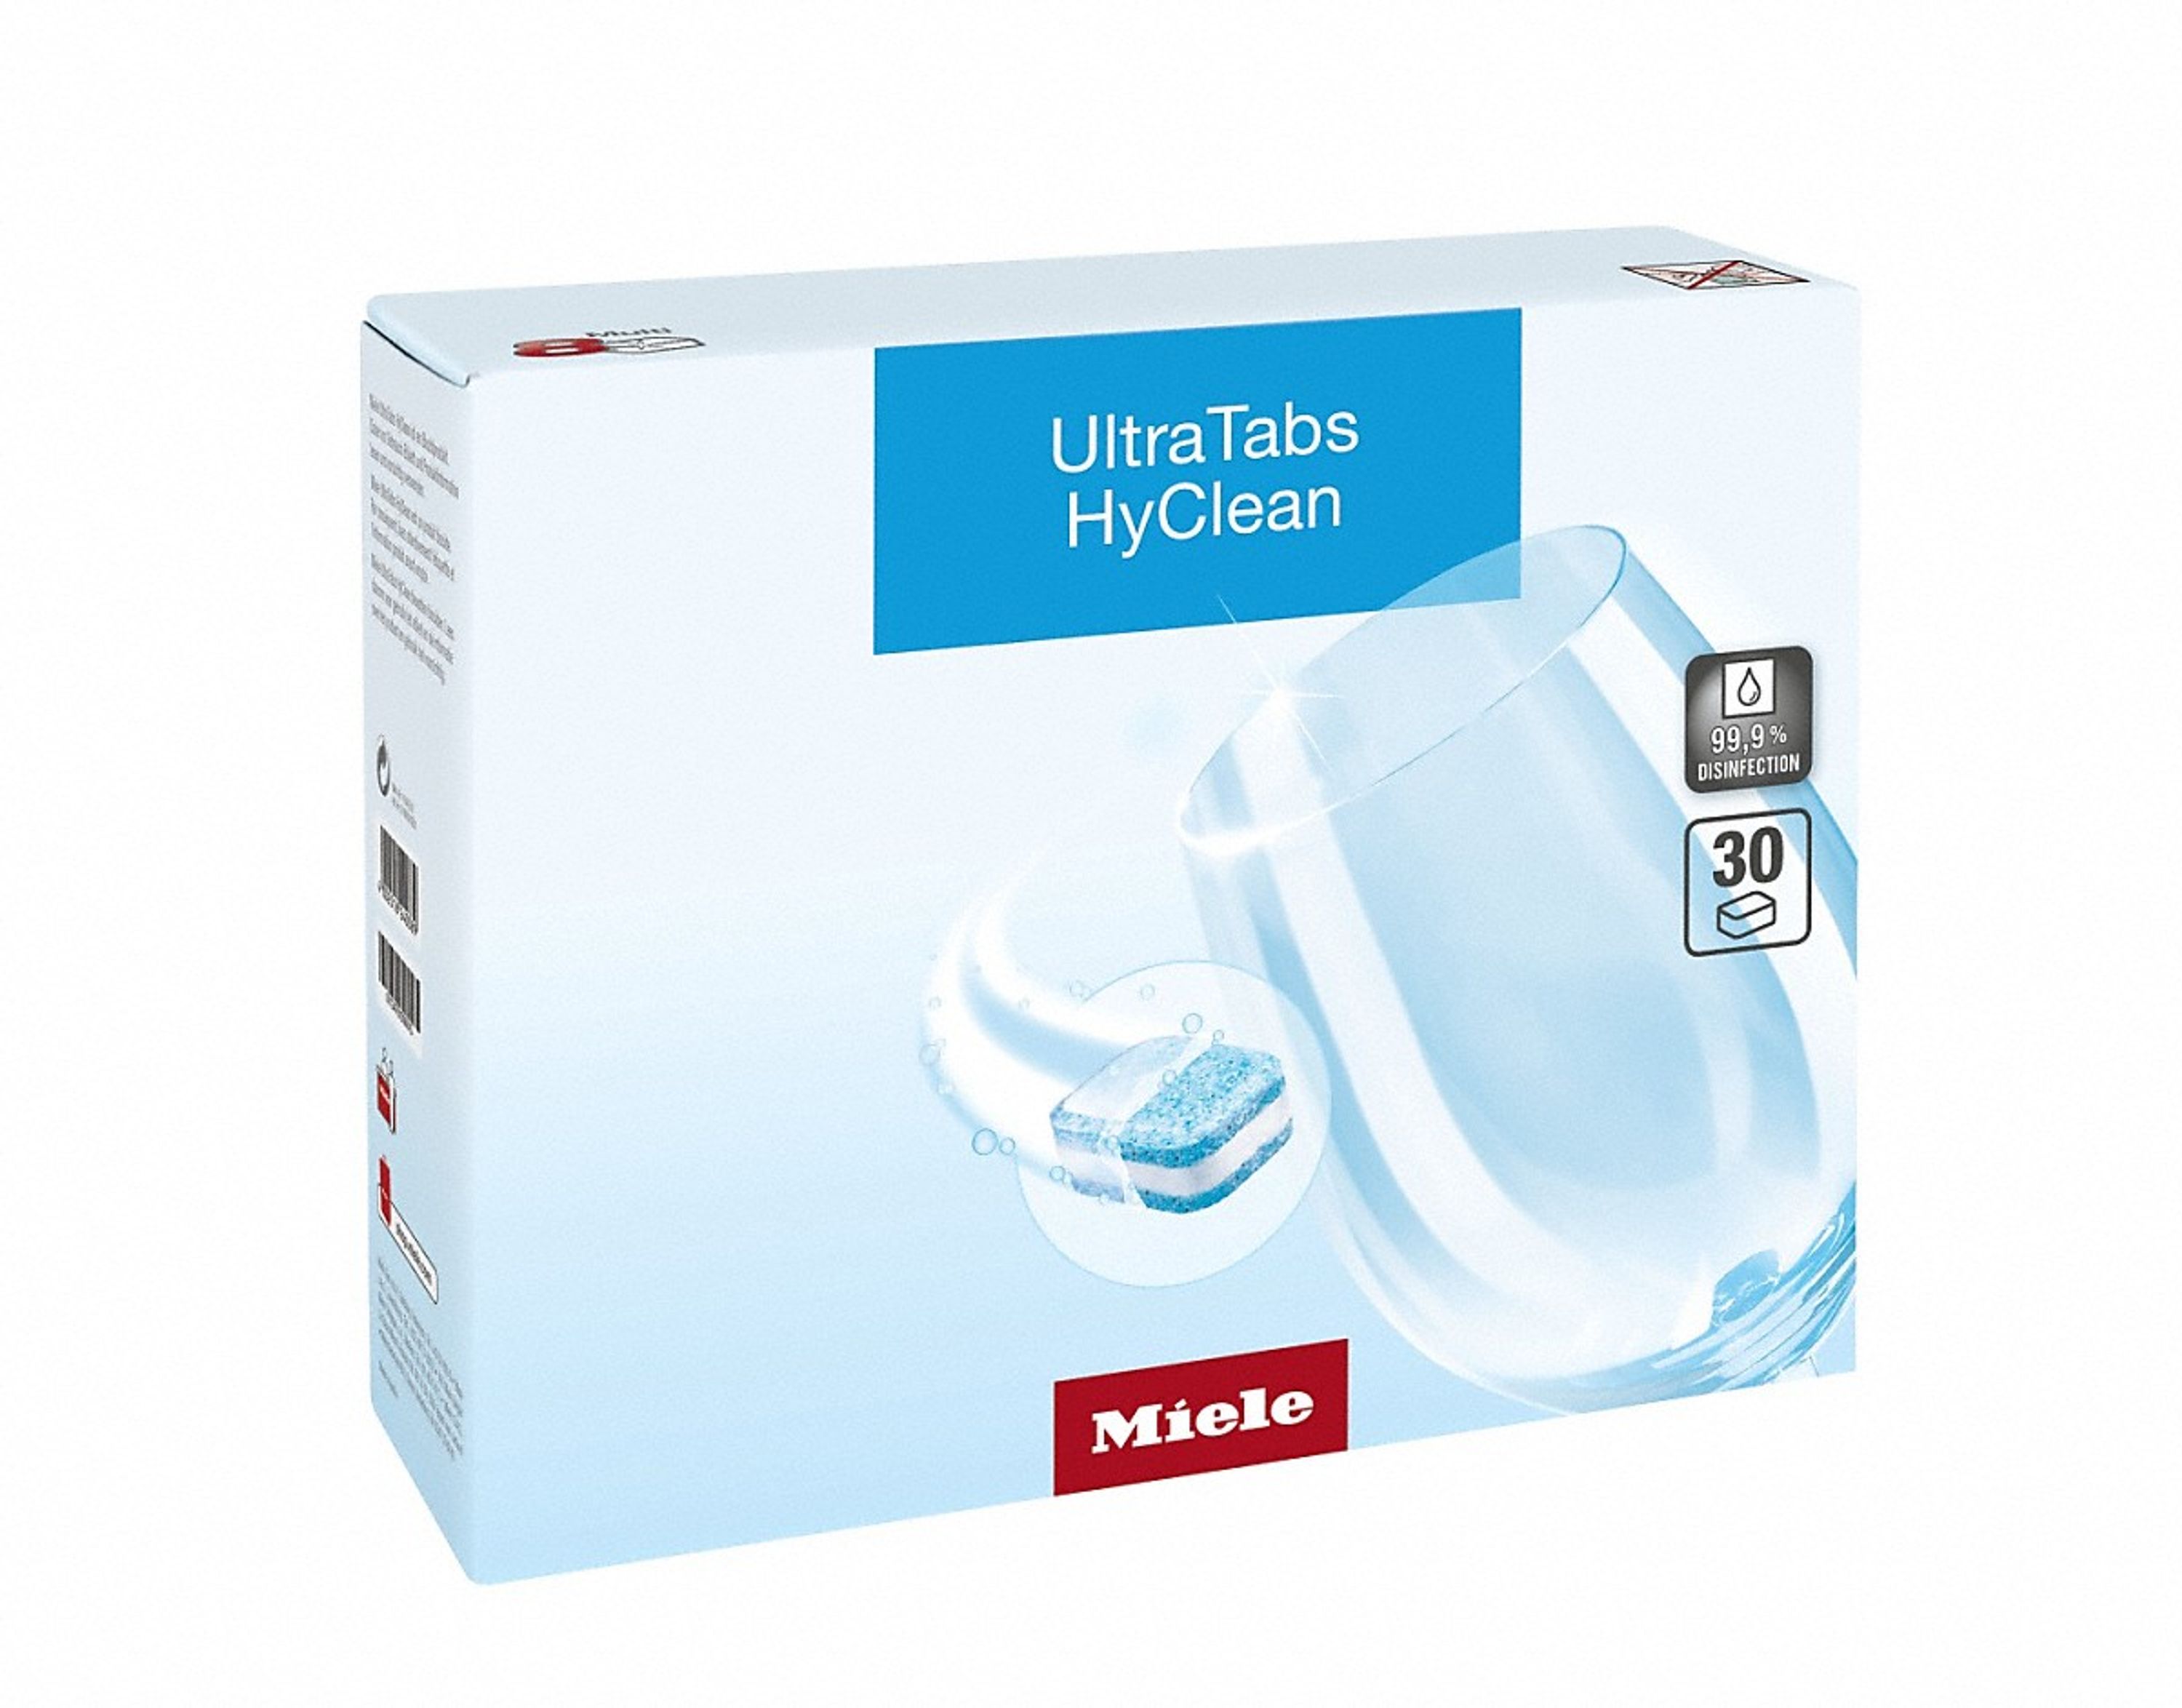 UltraTabs HyClean, Miele Reiniger-Tabs für Geschirrspüler